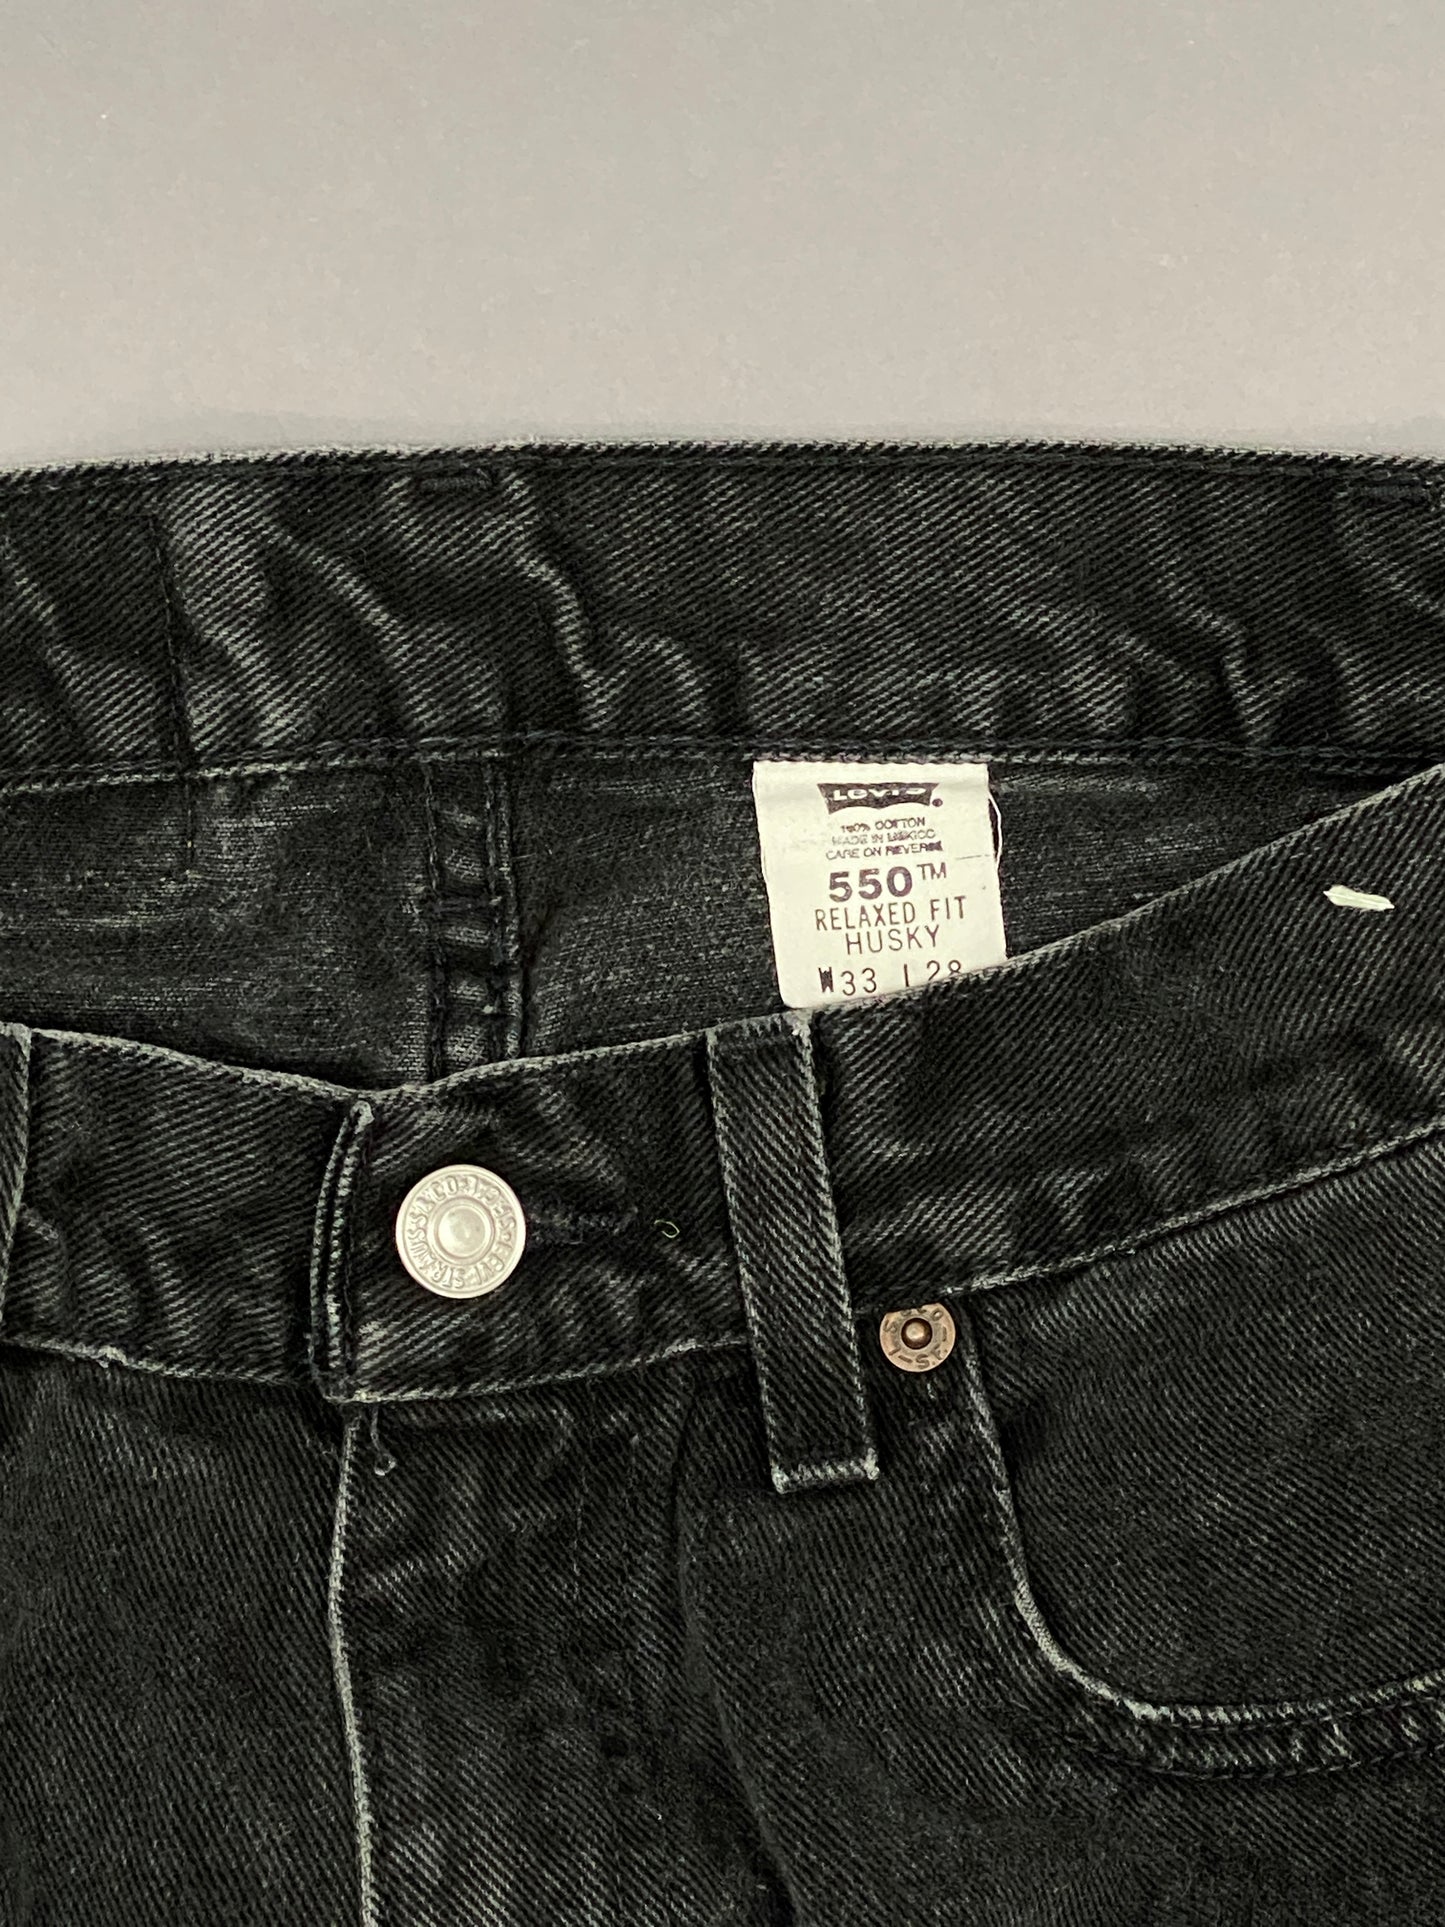 Levis 550 Husky Vintage Jeans - 33x28